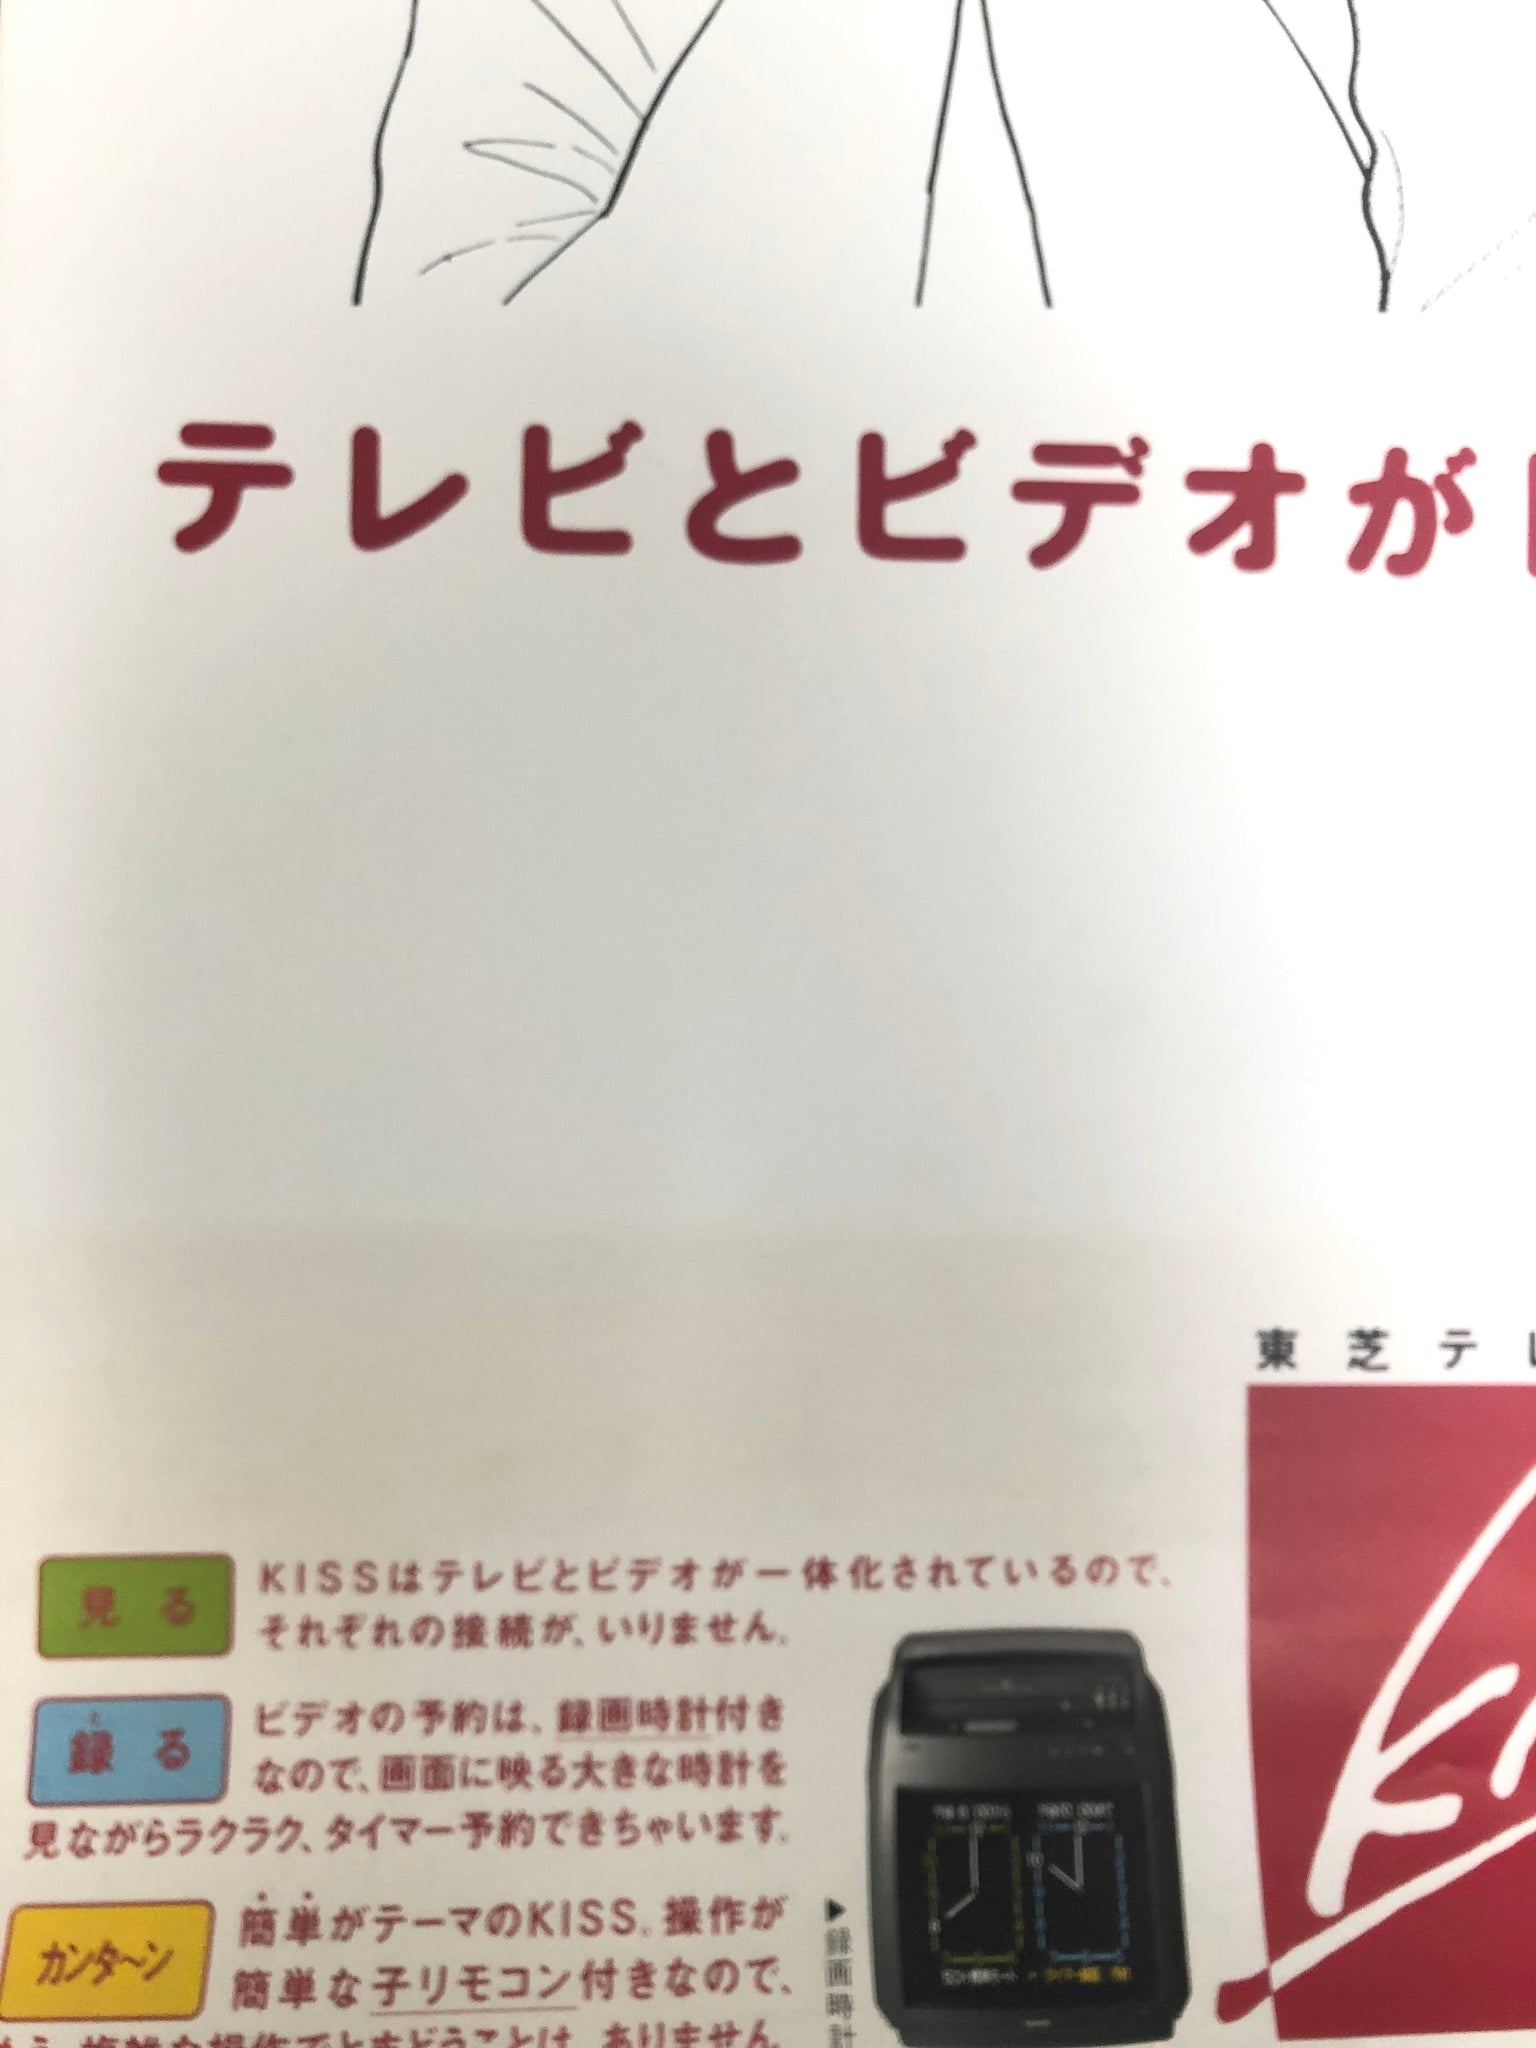 Vintage Japanese Toshiba “Kiss” Advertisement poster